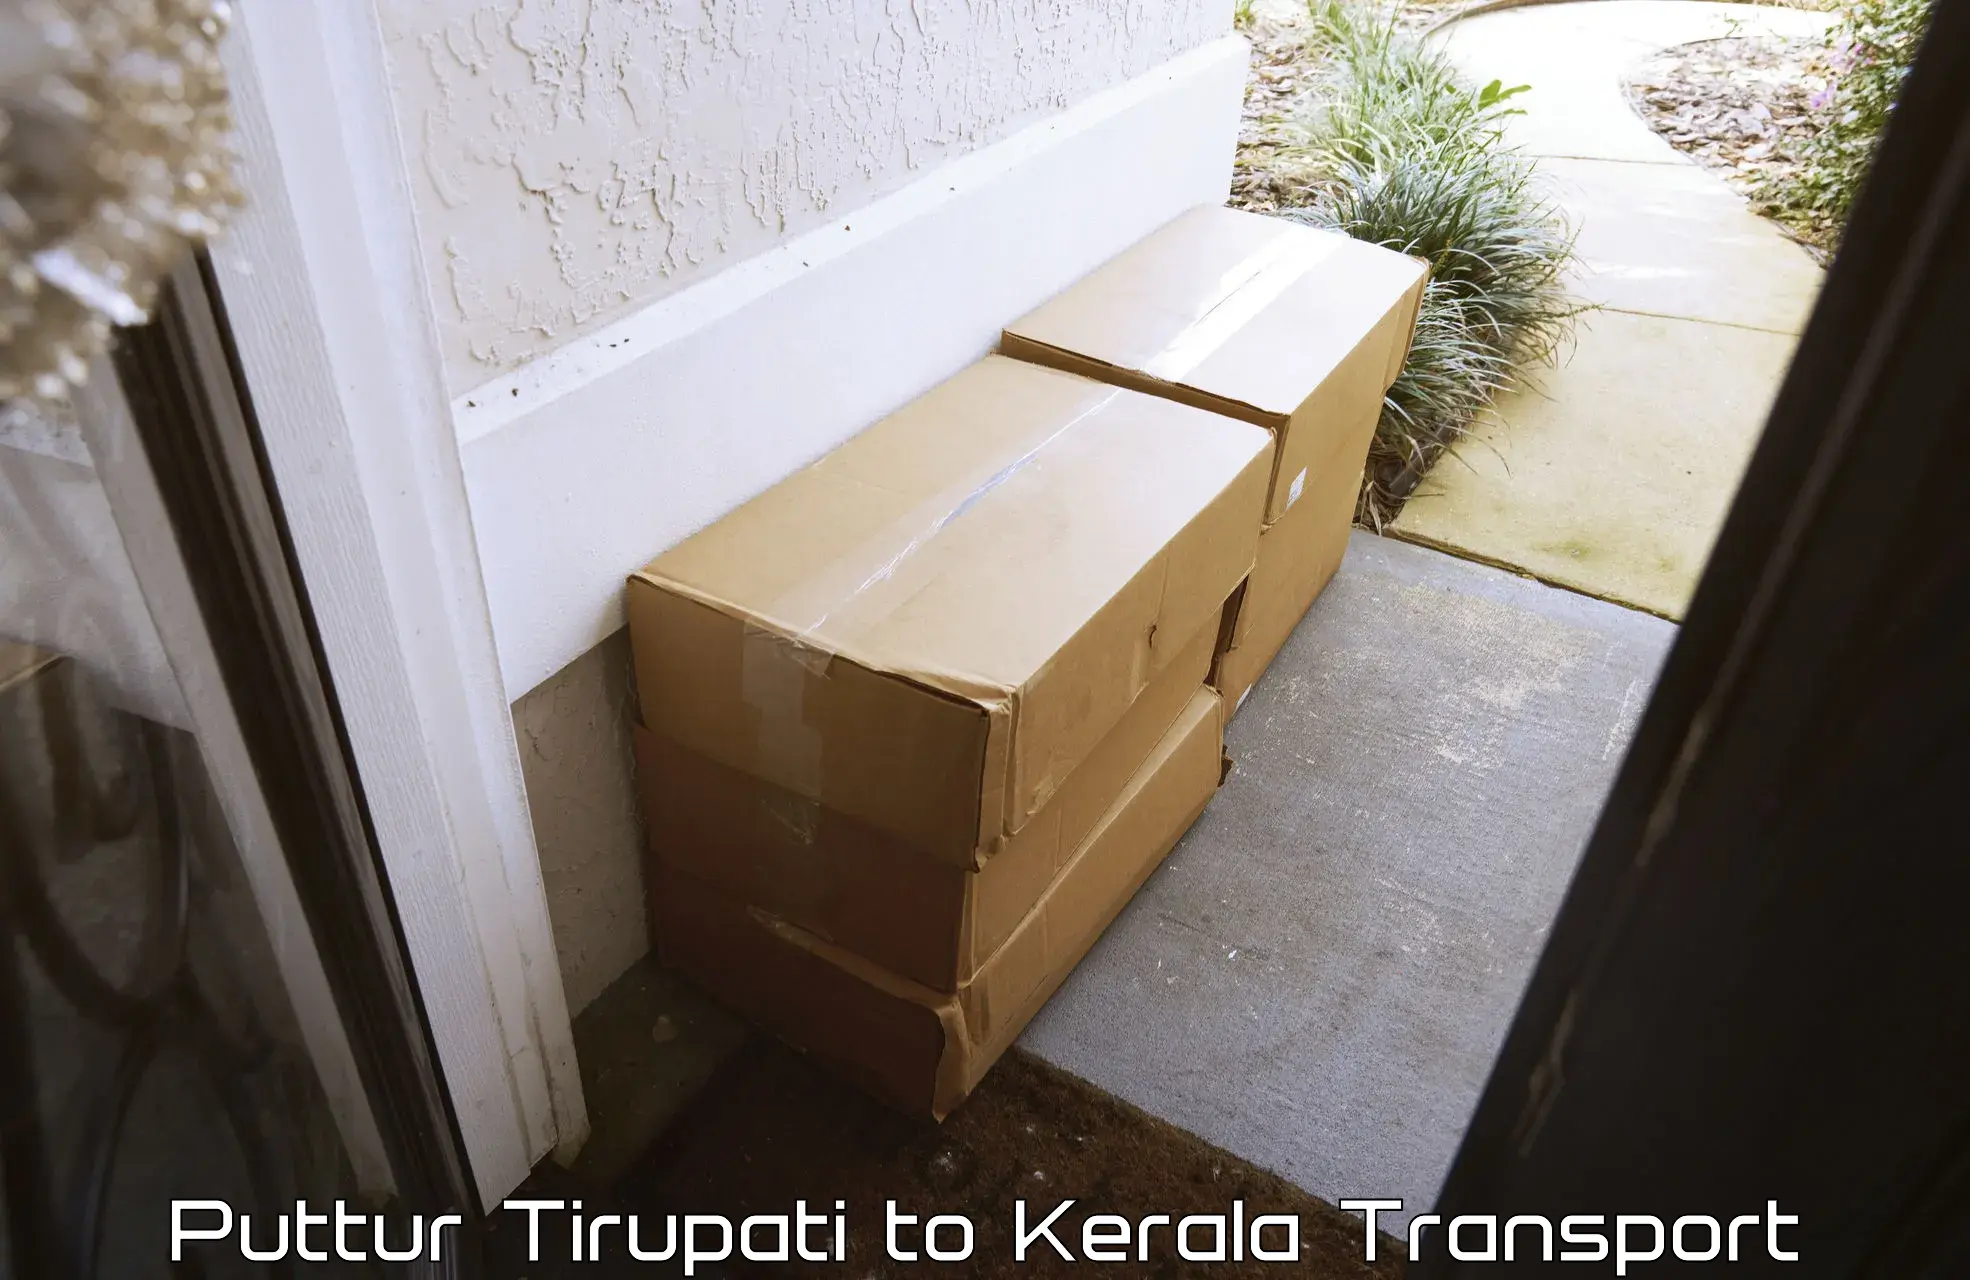 Cycle transportation service Puttur Tirupati to Munnar